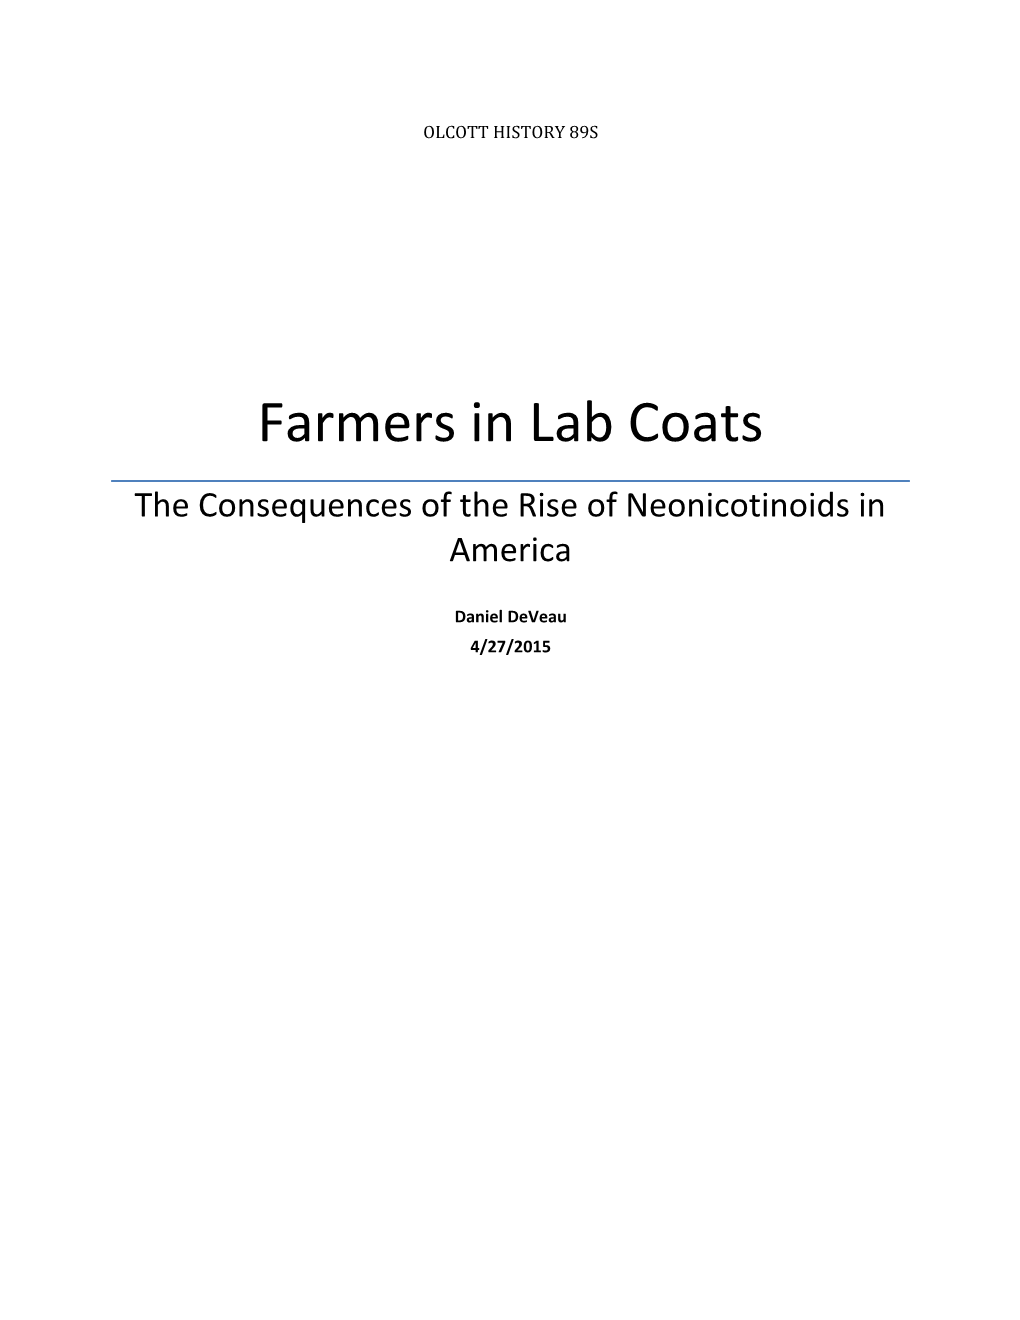 Farmers in Lab Coats